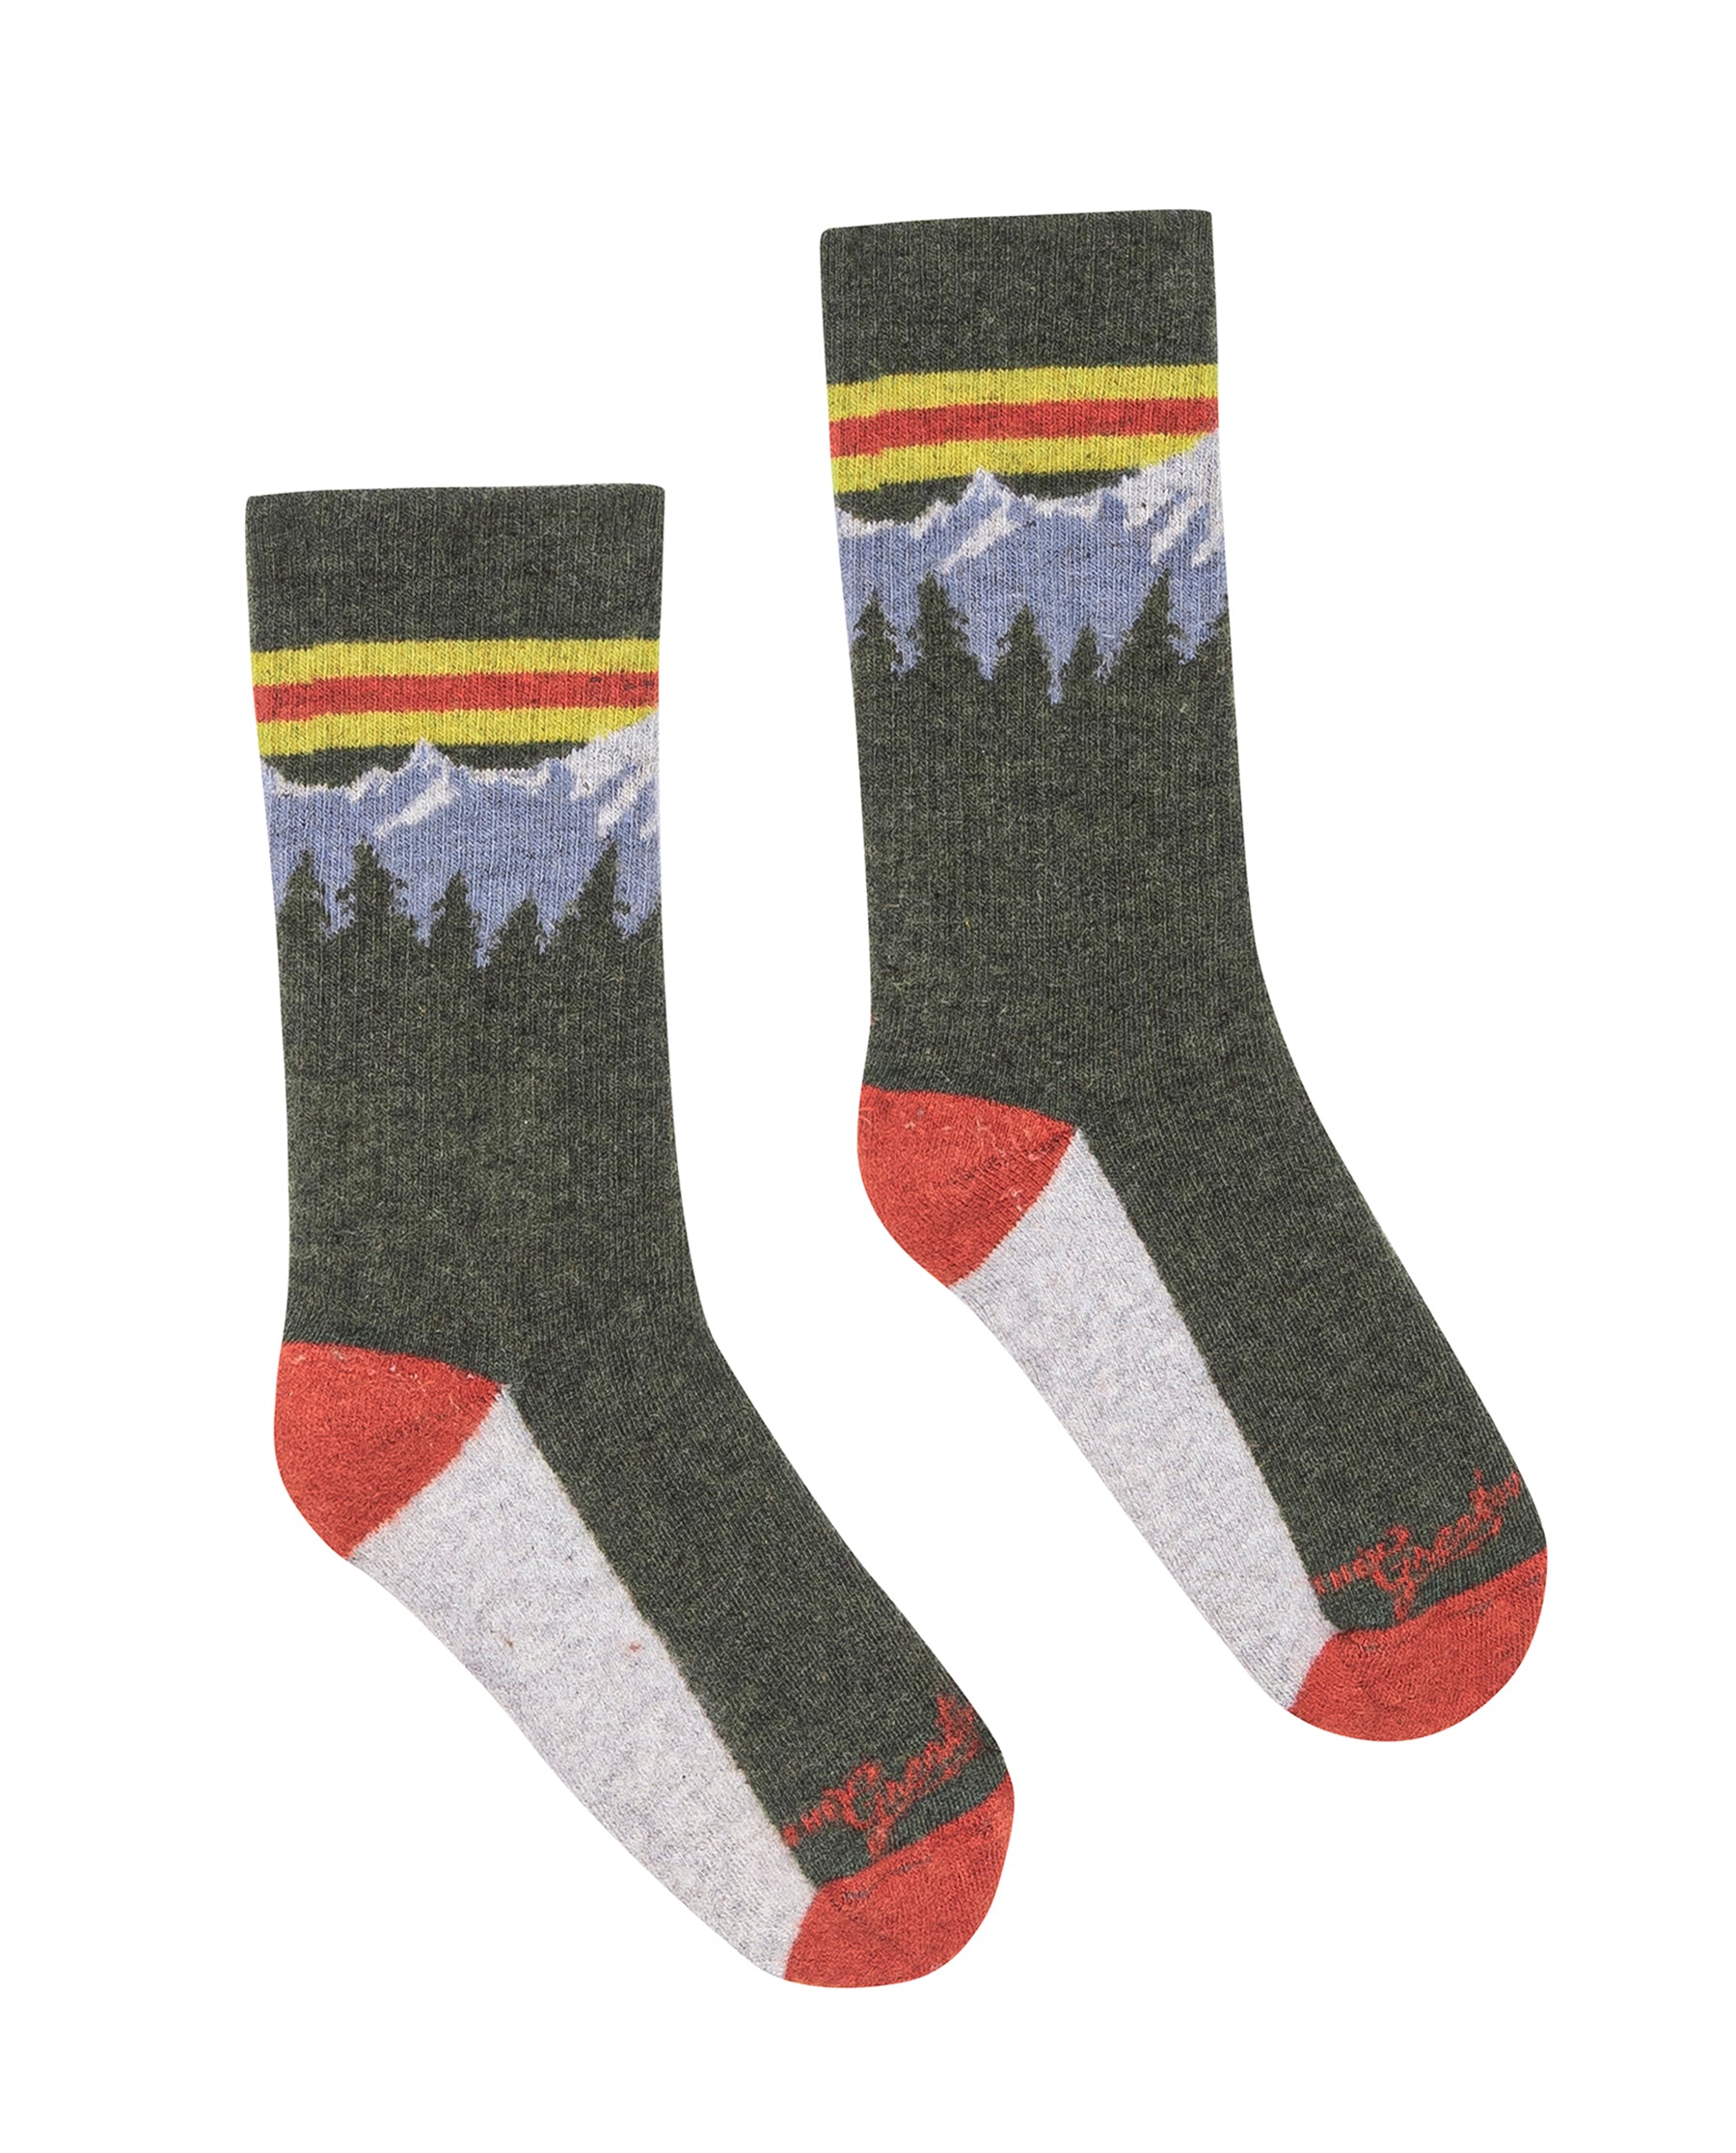 The Ridge Runner Sock. -- Evergreen SOCKS THE GREAT. FALL 23 TGO